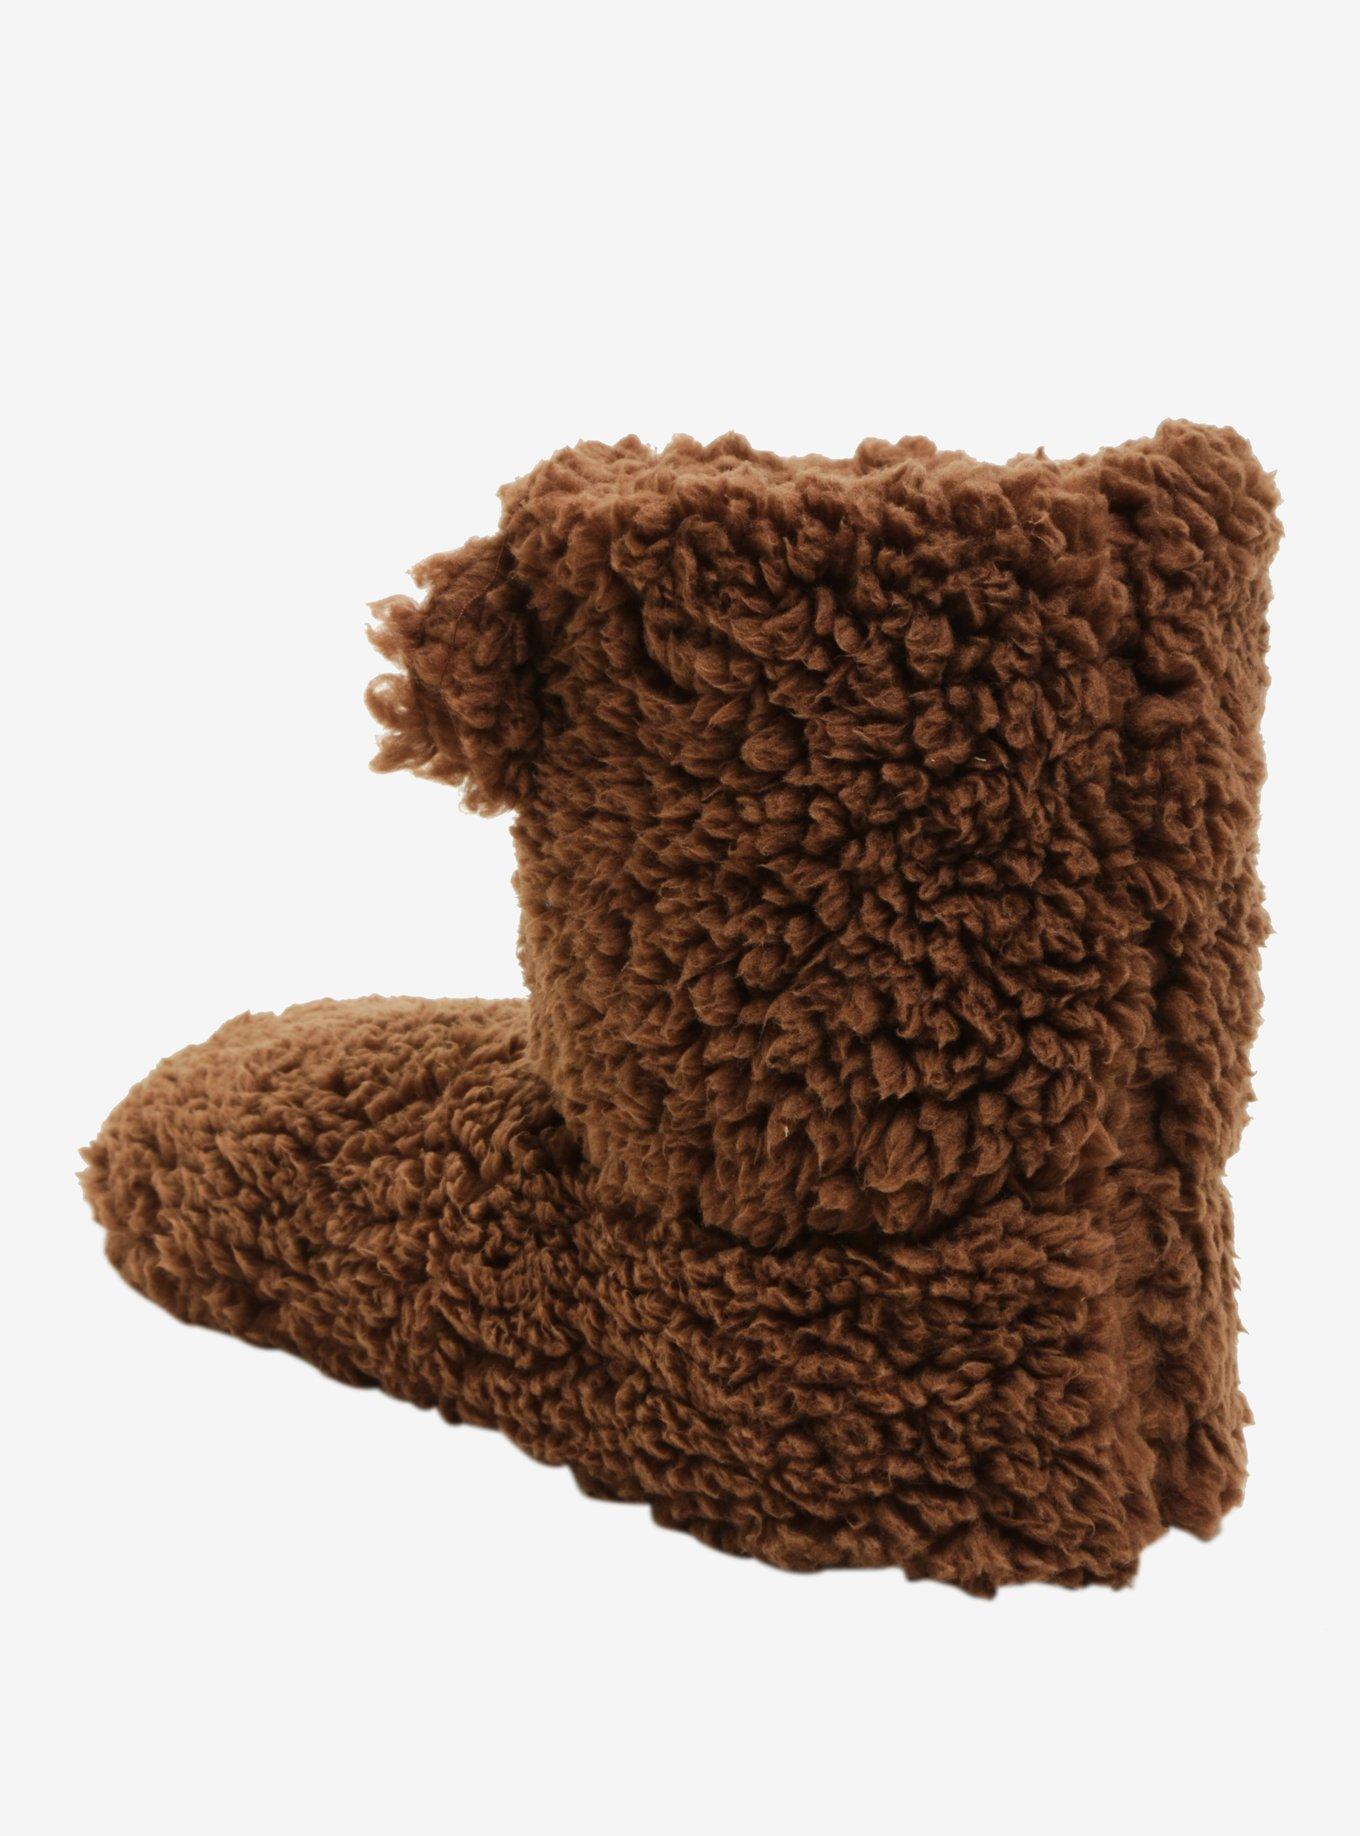 Brown Teddy Bear Slipper Boots, , alternate